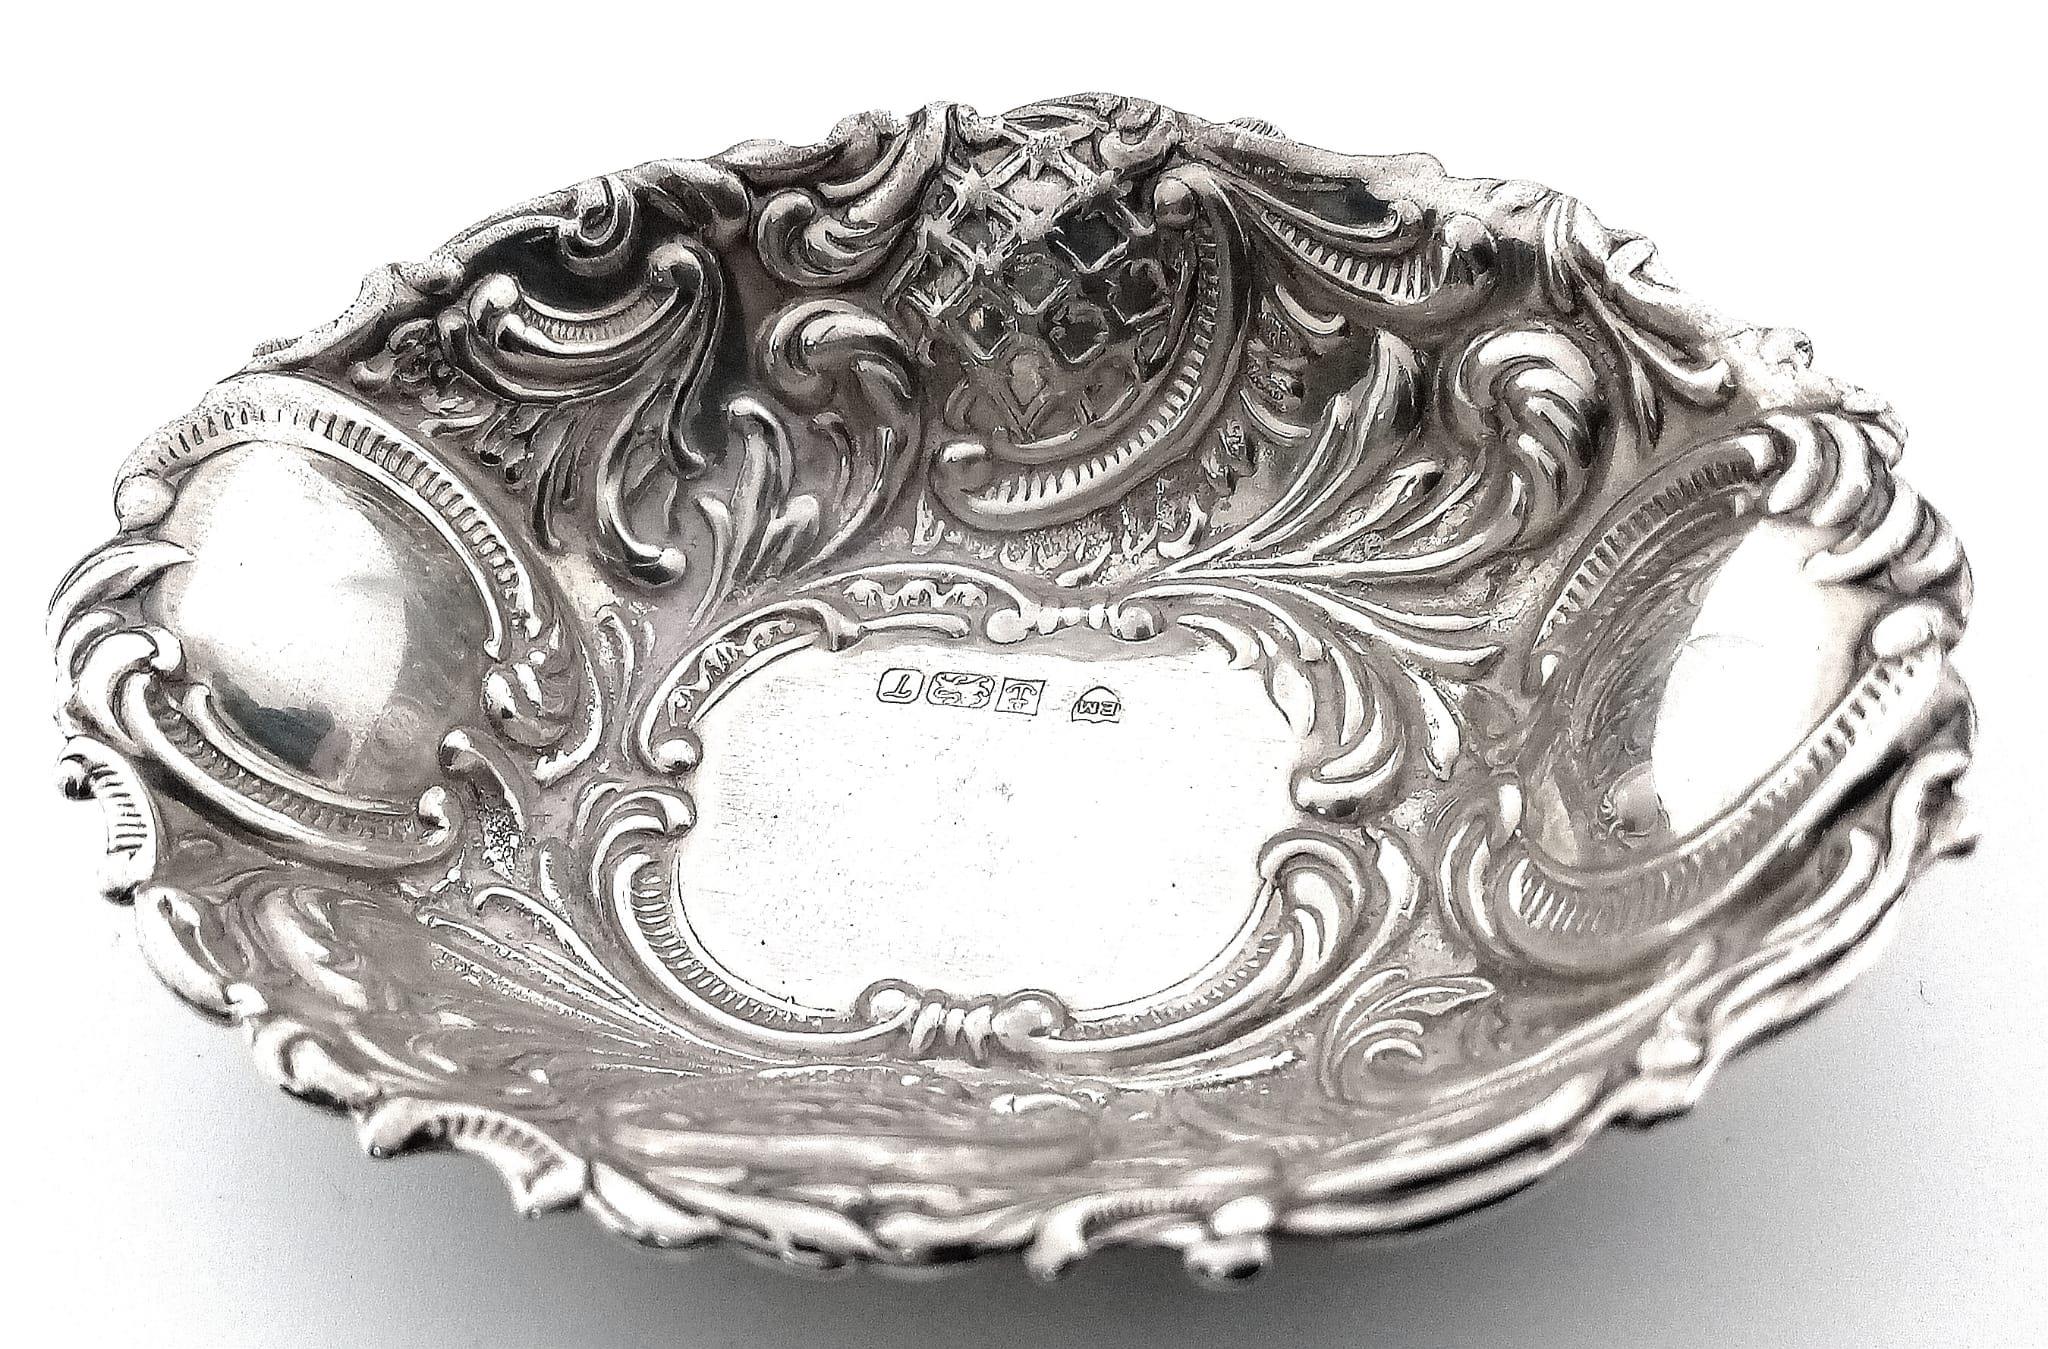 A Vintage Ornate Sterling Silver Small Dish - Birmingham hallmarks. 6.5cm. 14g - Image 5 of 7